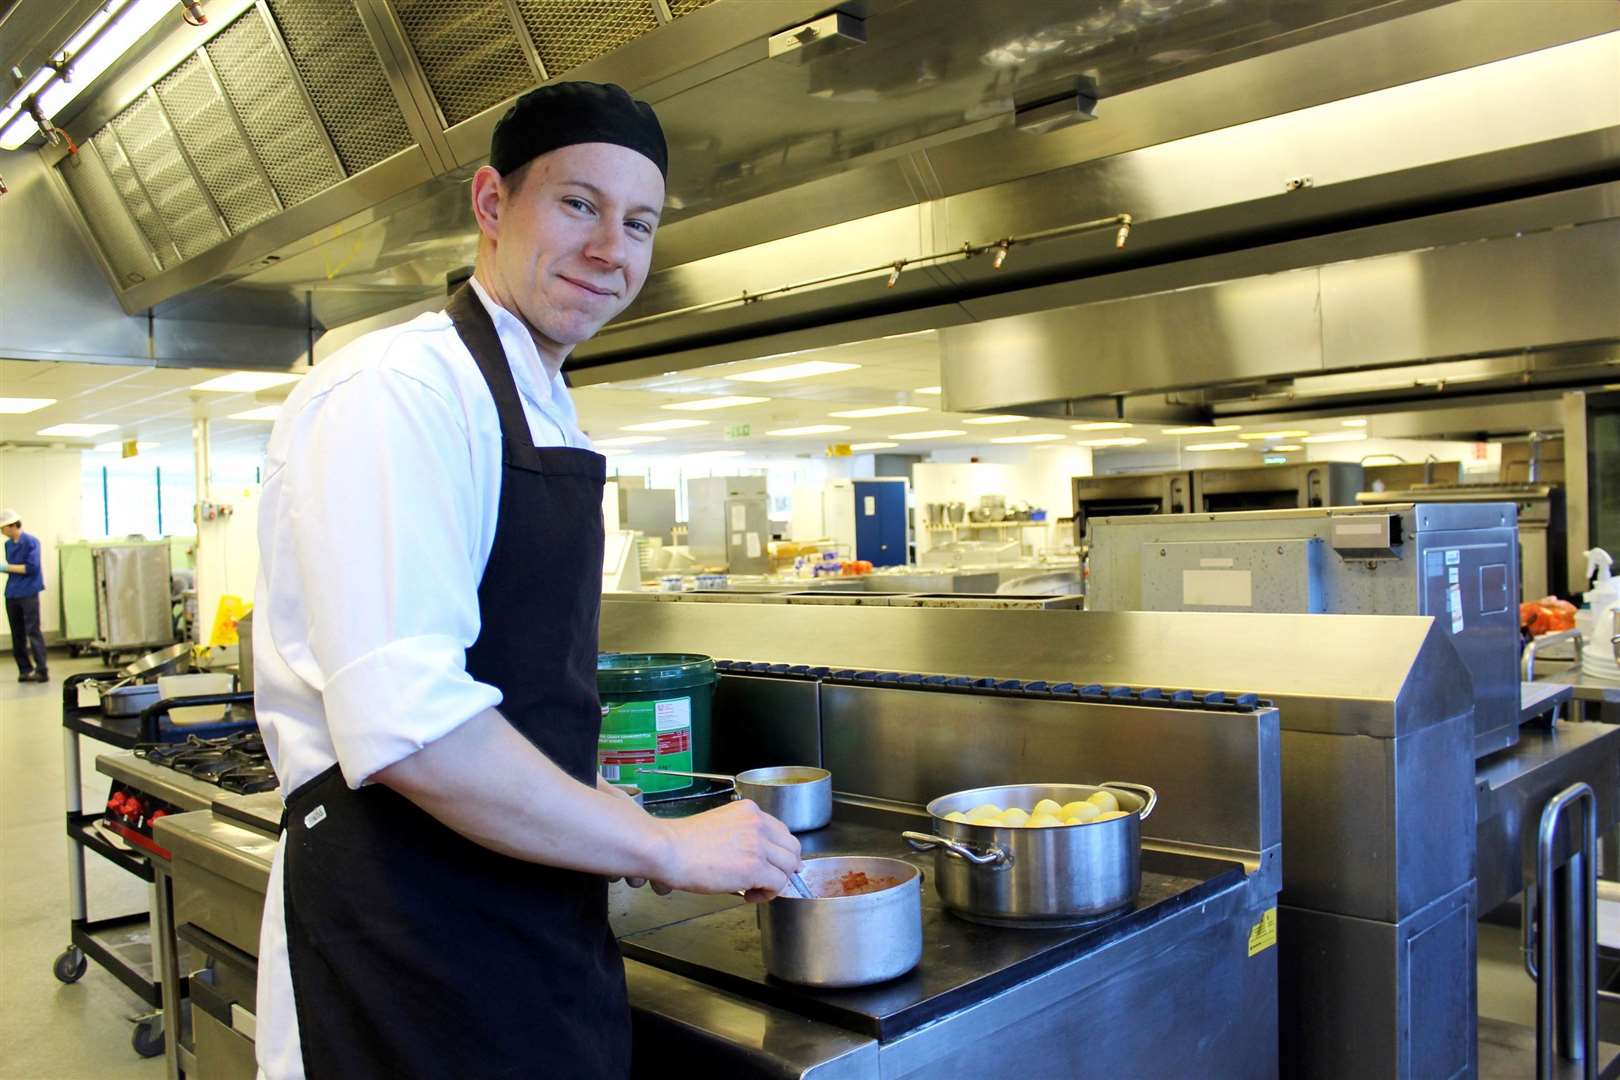 Head chef Luke Nobbs. Picture: West Suffolk NHS Foundation Trust